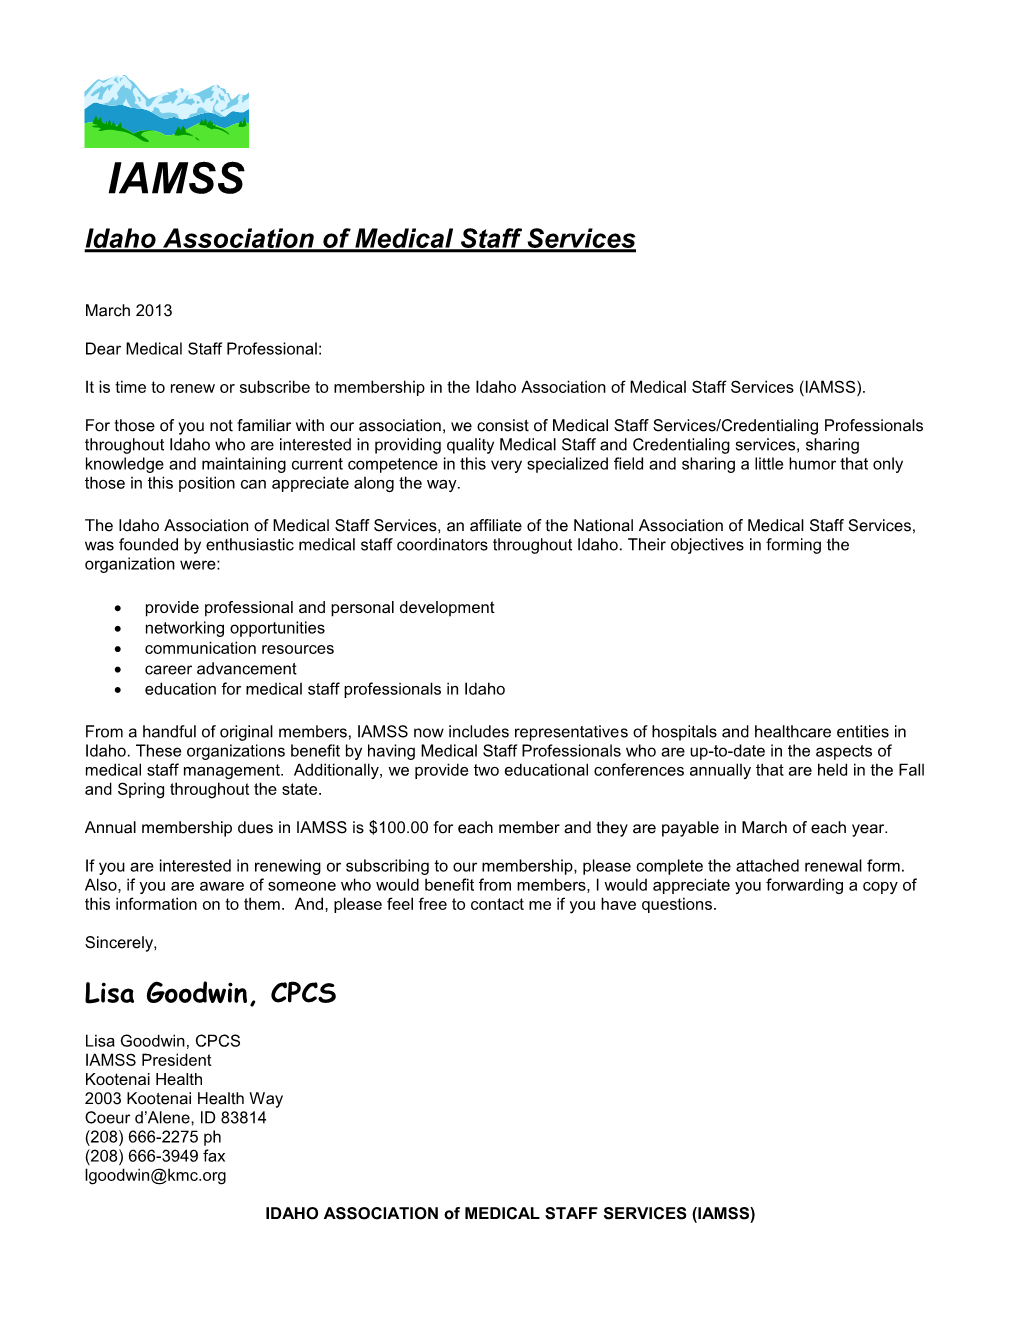 IDAHO ASSOCIATION of MEDICAL STAFF SERVICES (IAMSS)